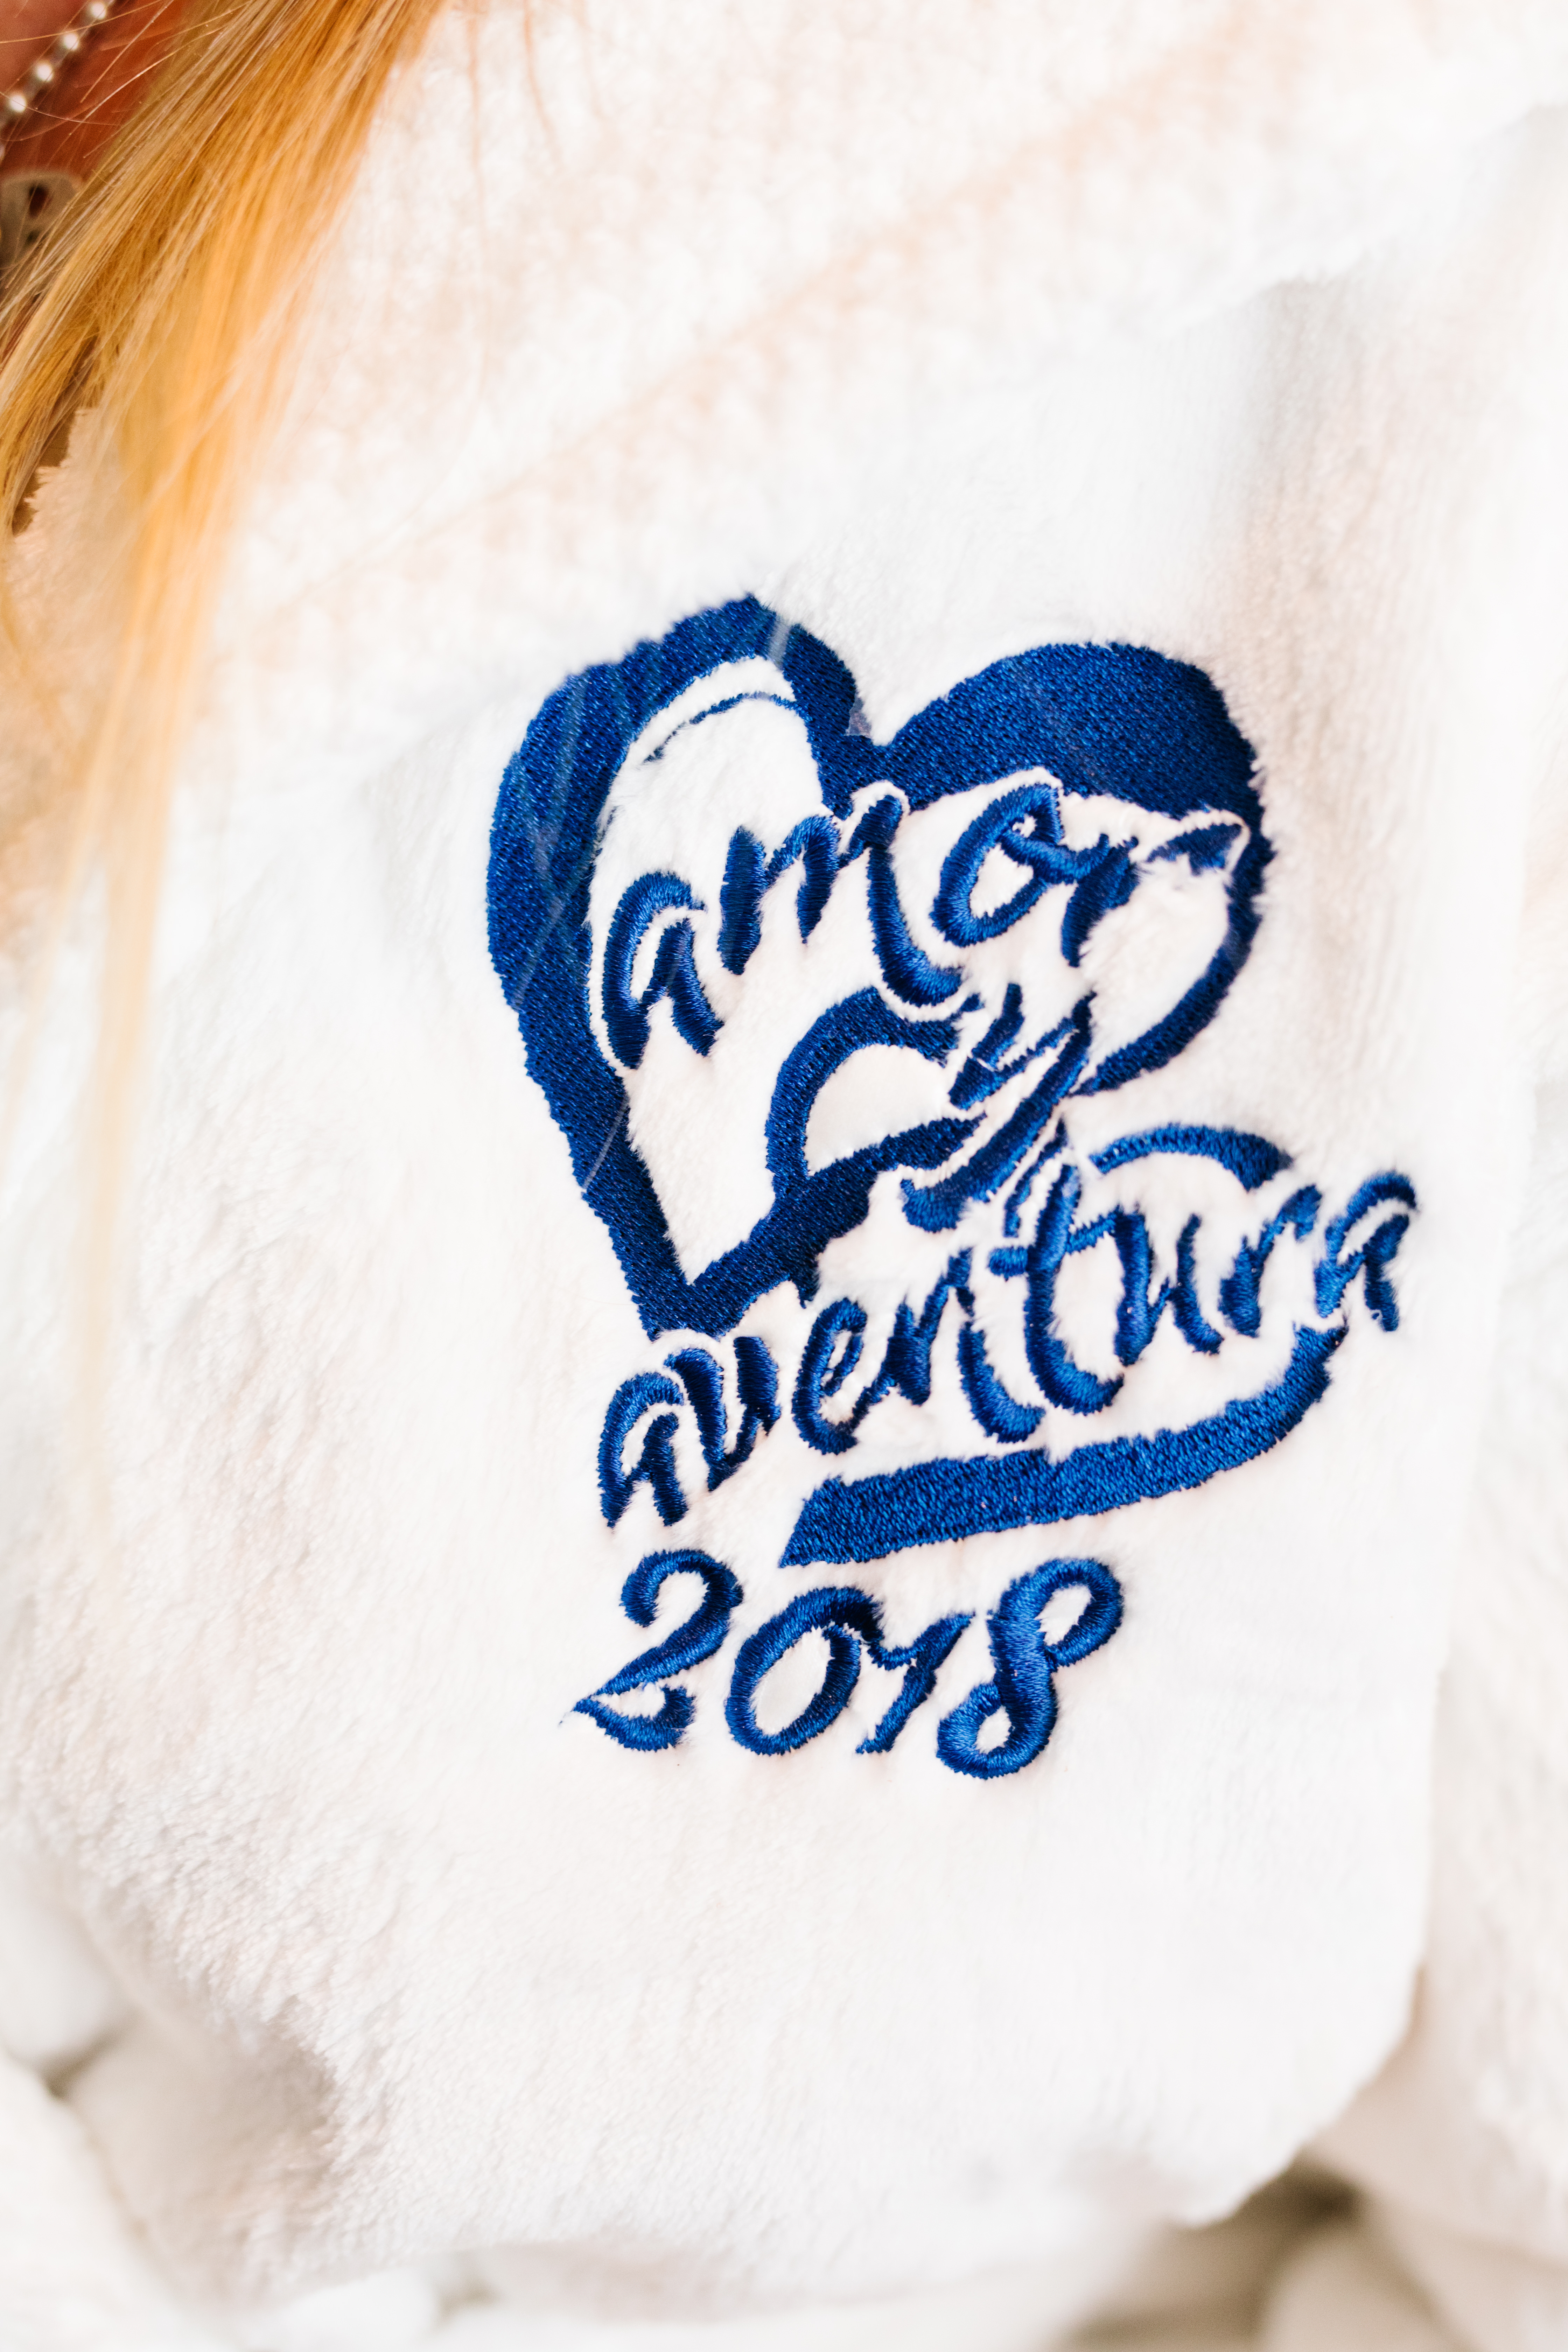 Wedding logo "amor y aventura" on white robe sunset cliffs wedding